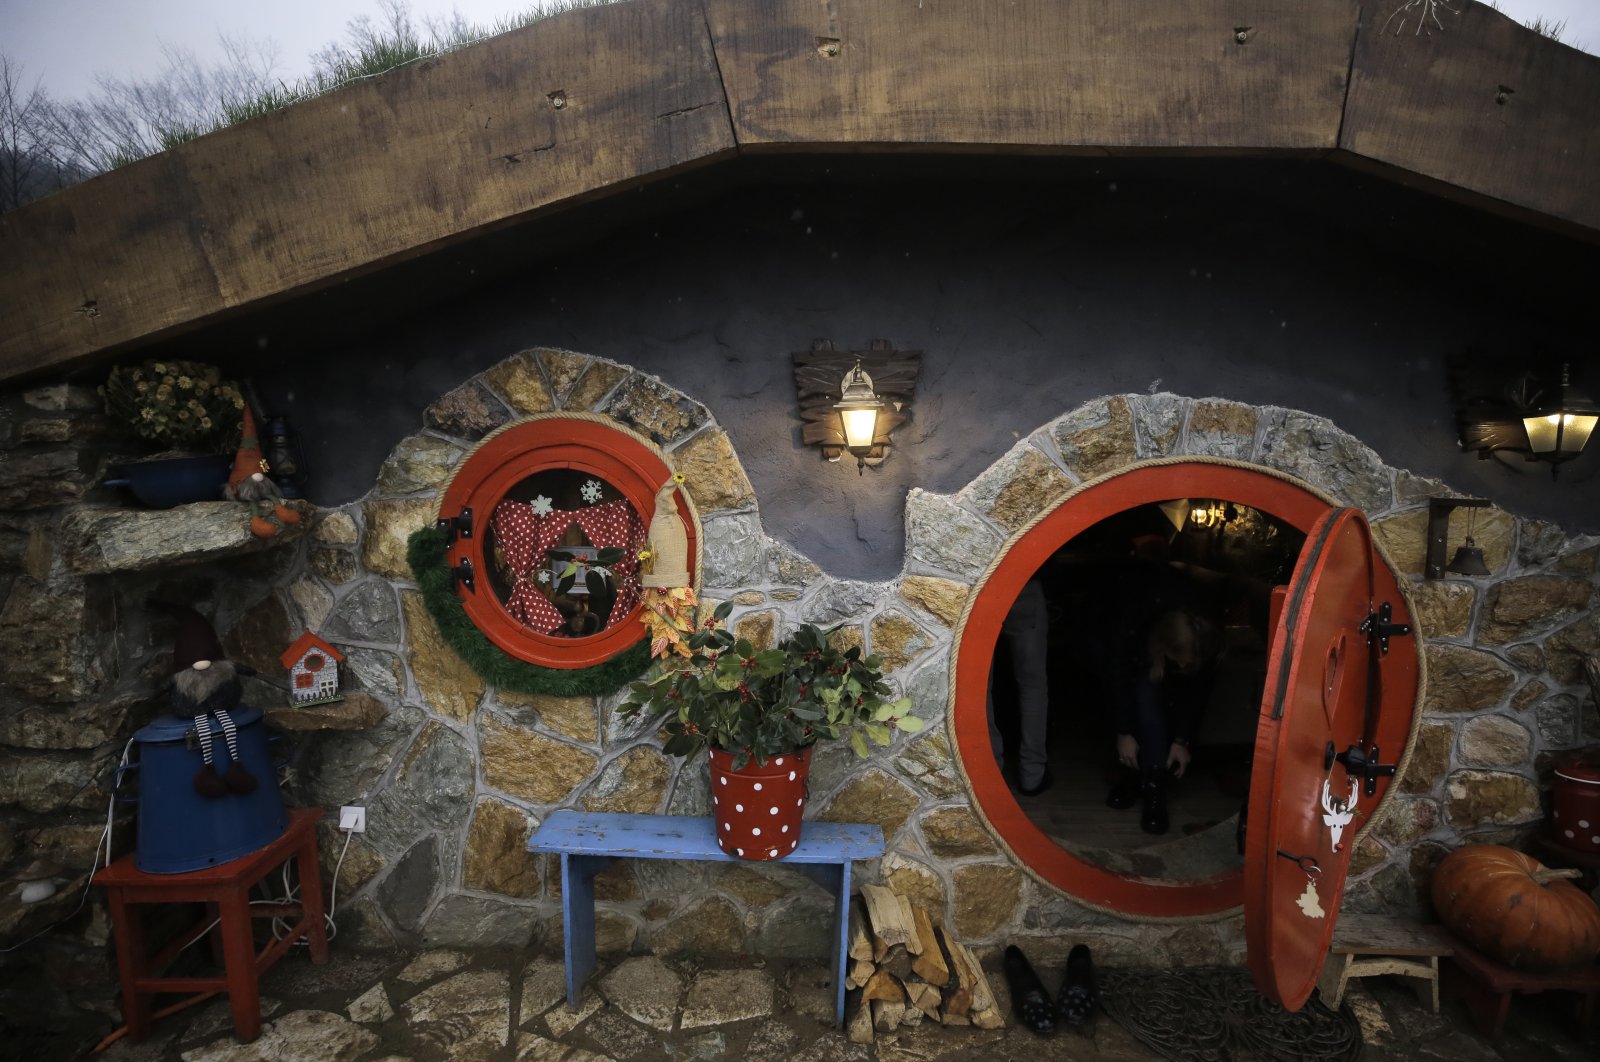 Saudari Bosnia membangun rumah hobbit, mencerminkan semangat Middle-earth